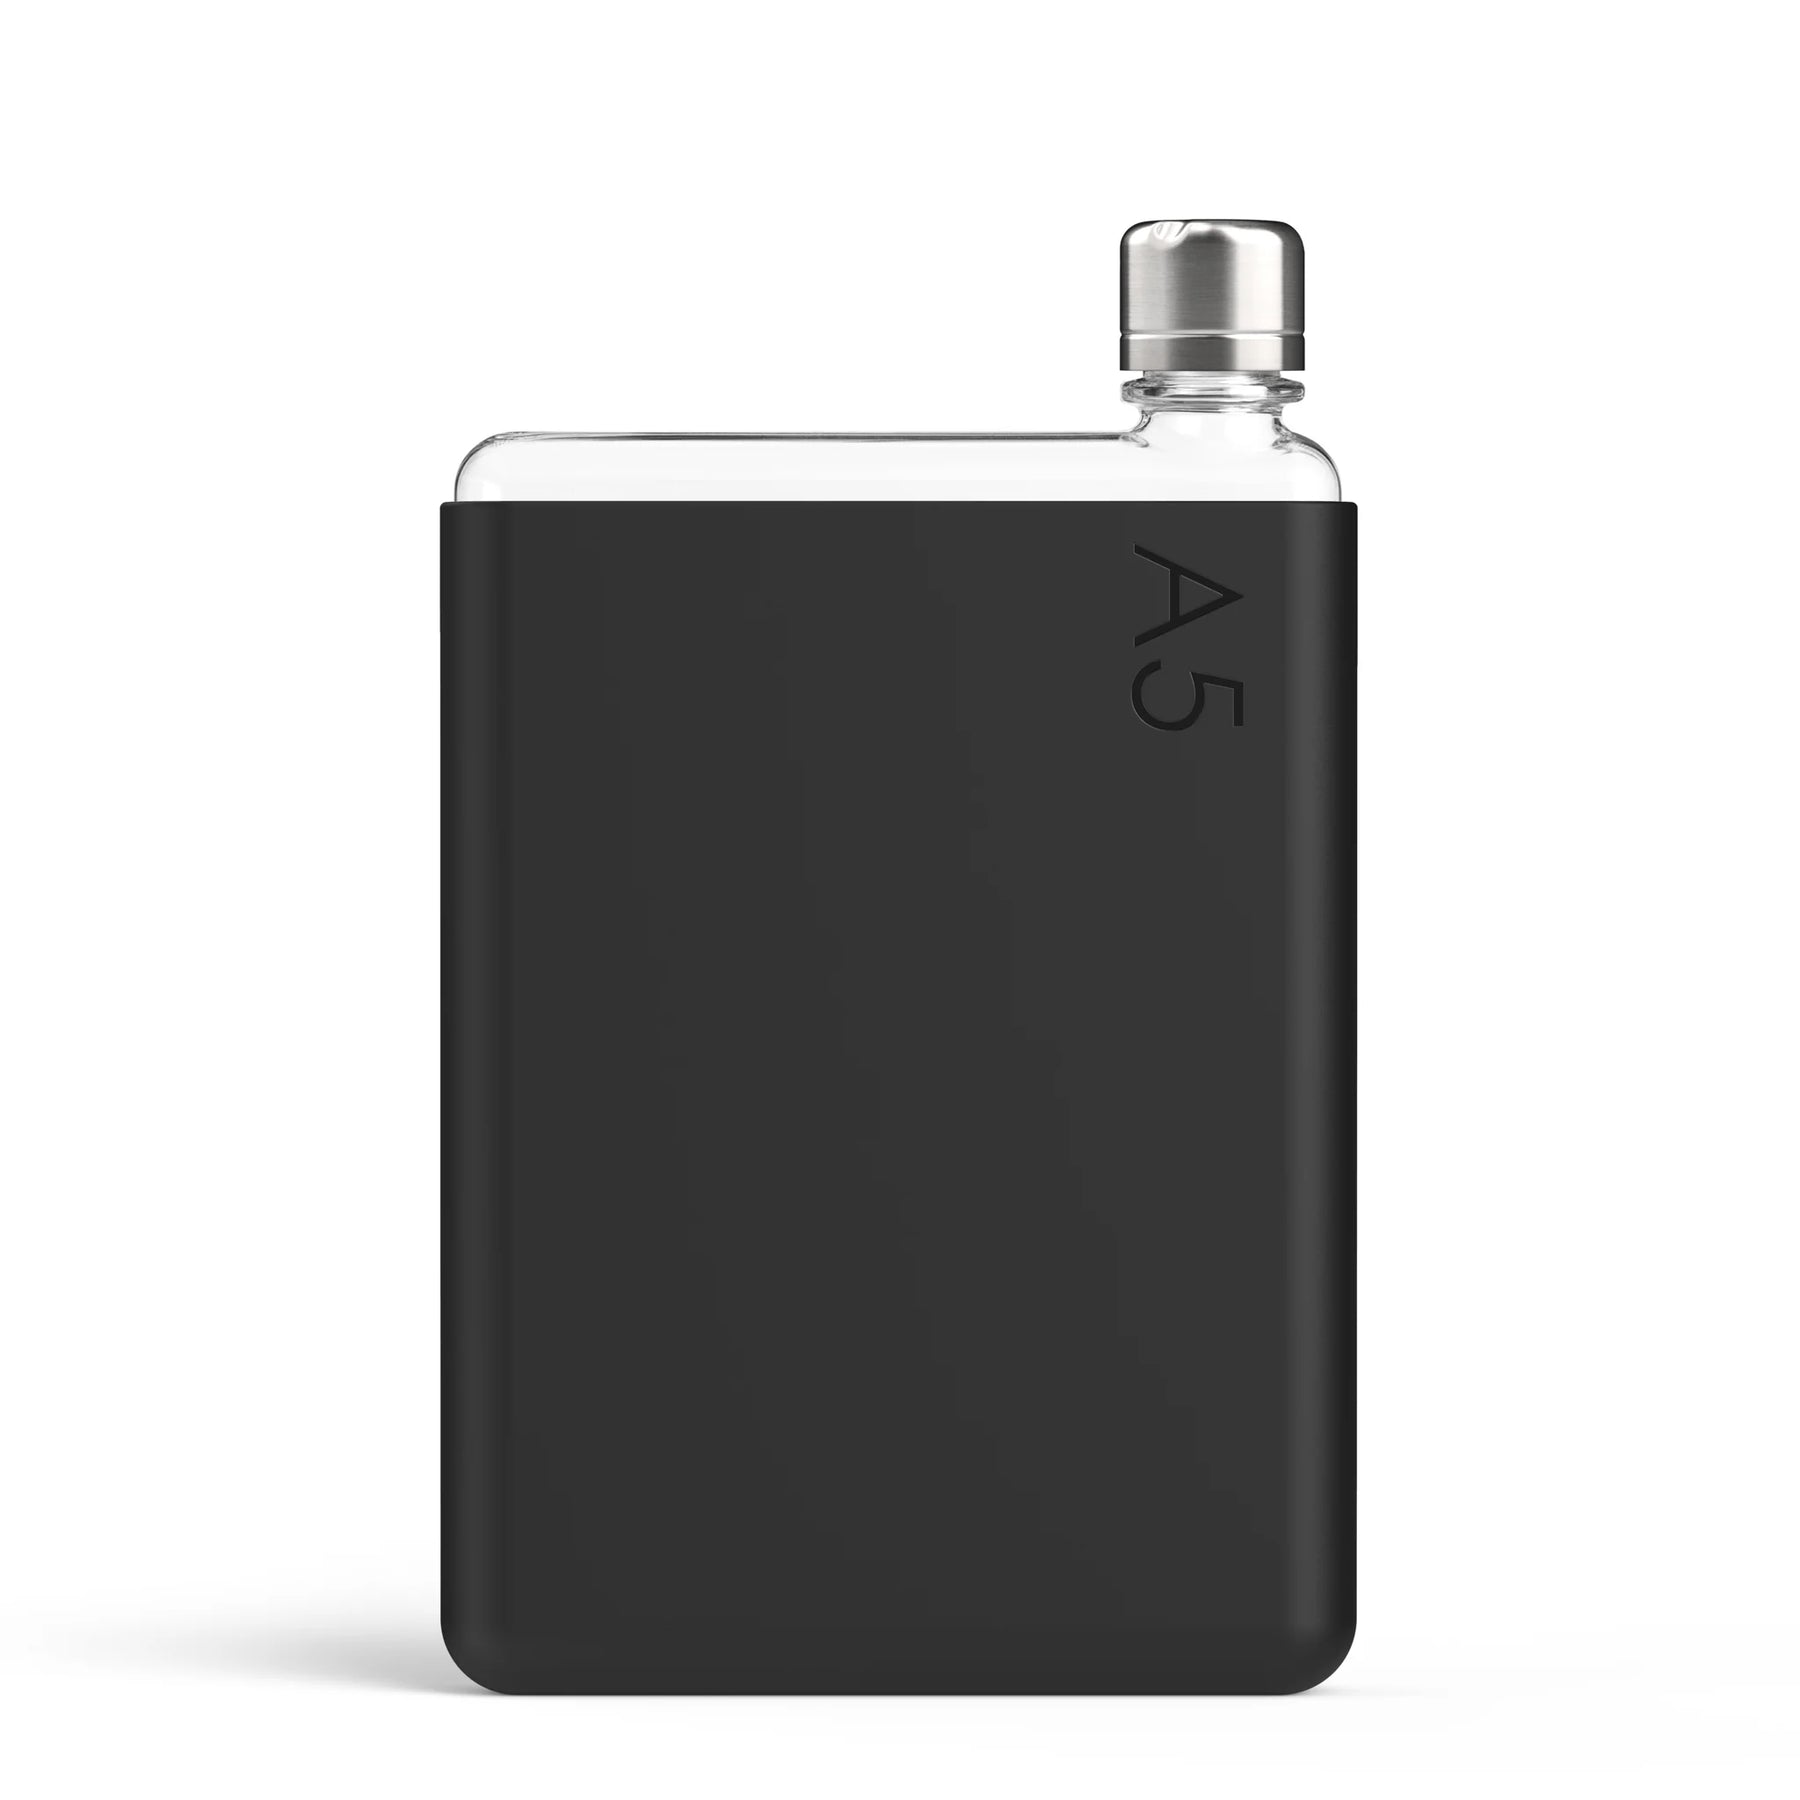 A5 memobottle Silicone Sleeve, Black Ink | memobottle - Wake Concept Store  